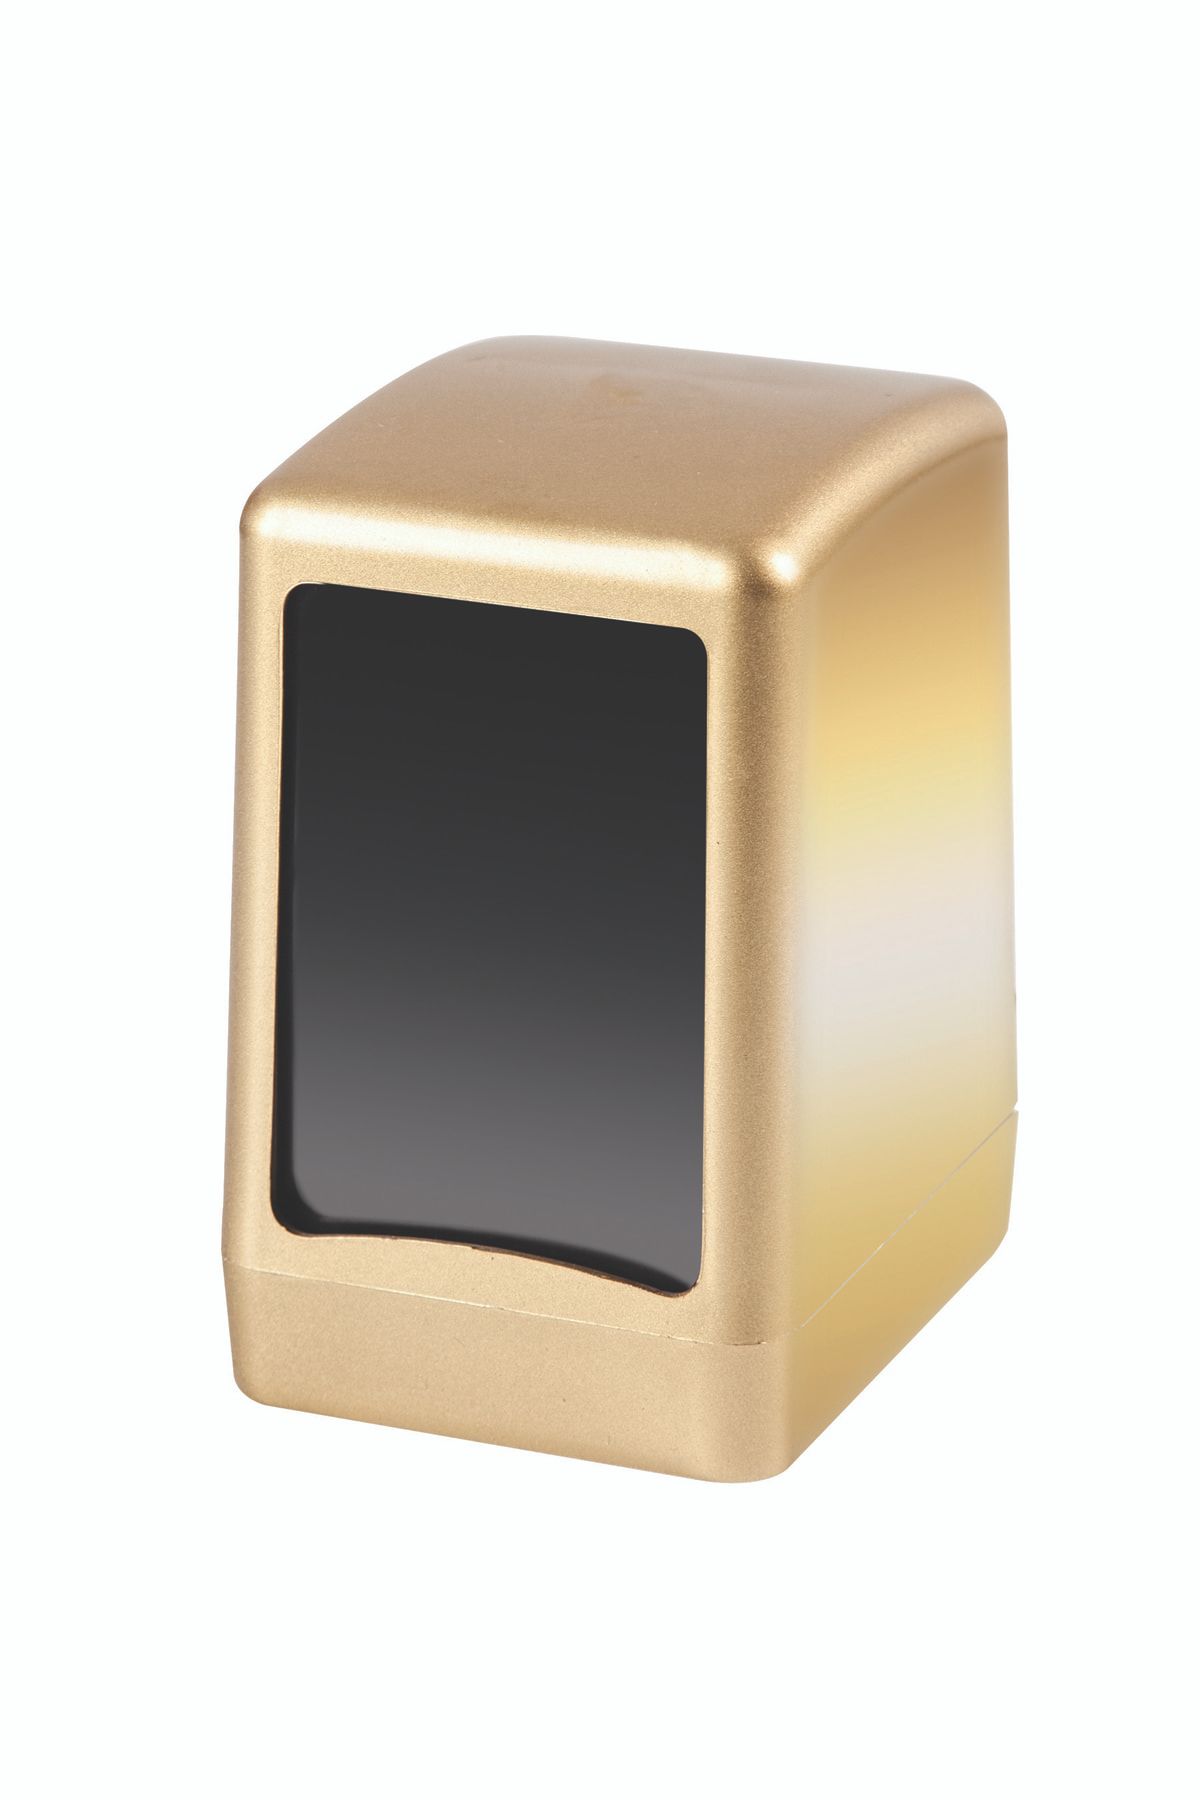 Palex (ün-ev) Masa Üstü Peçetelik (masa Üstü Peçete Dispenseri) (ağır) Gold 3474-g